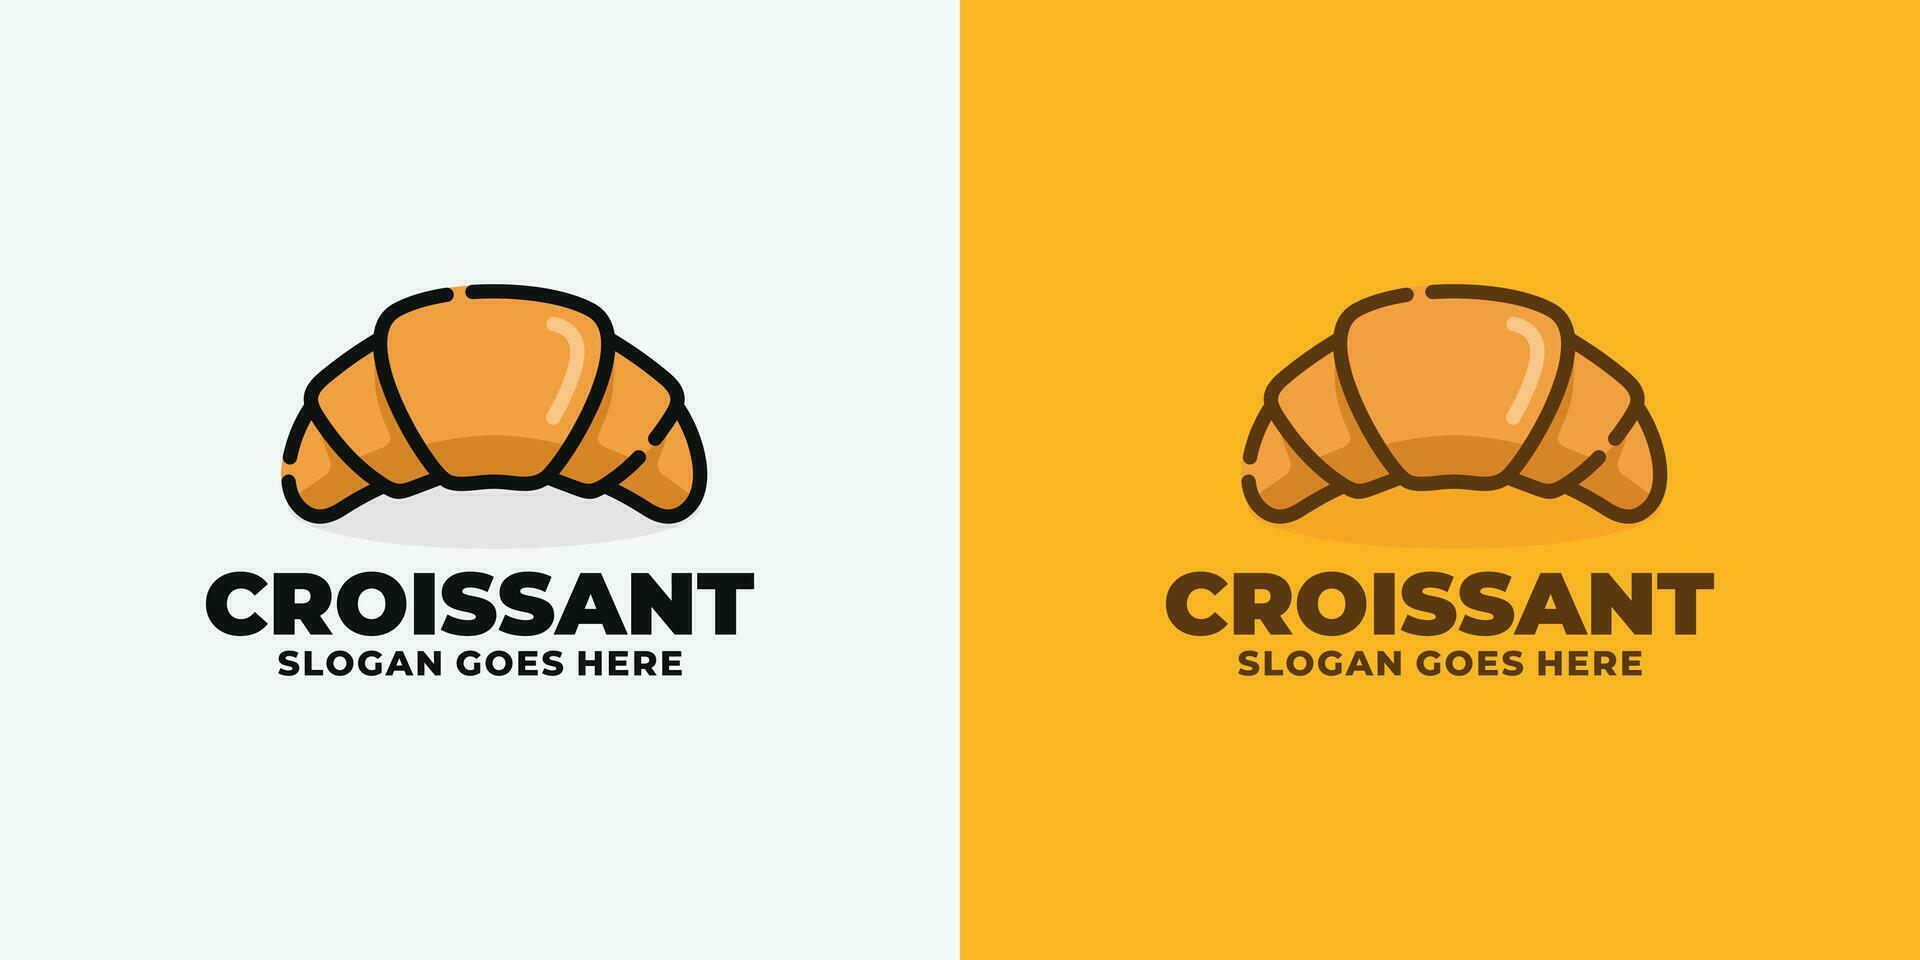 Croissant logo design vector illustration